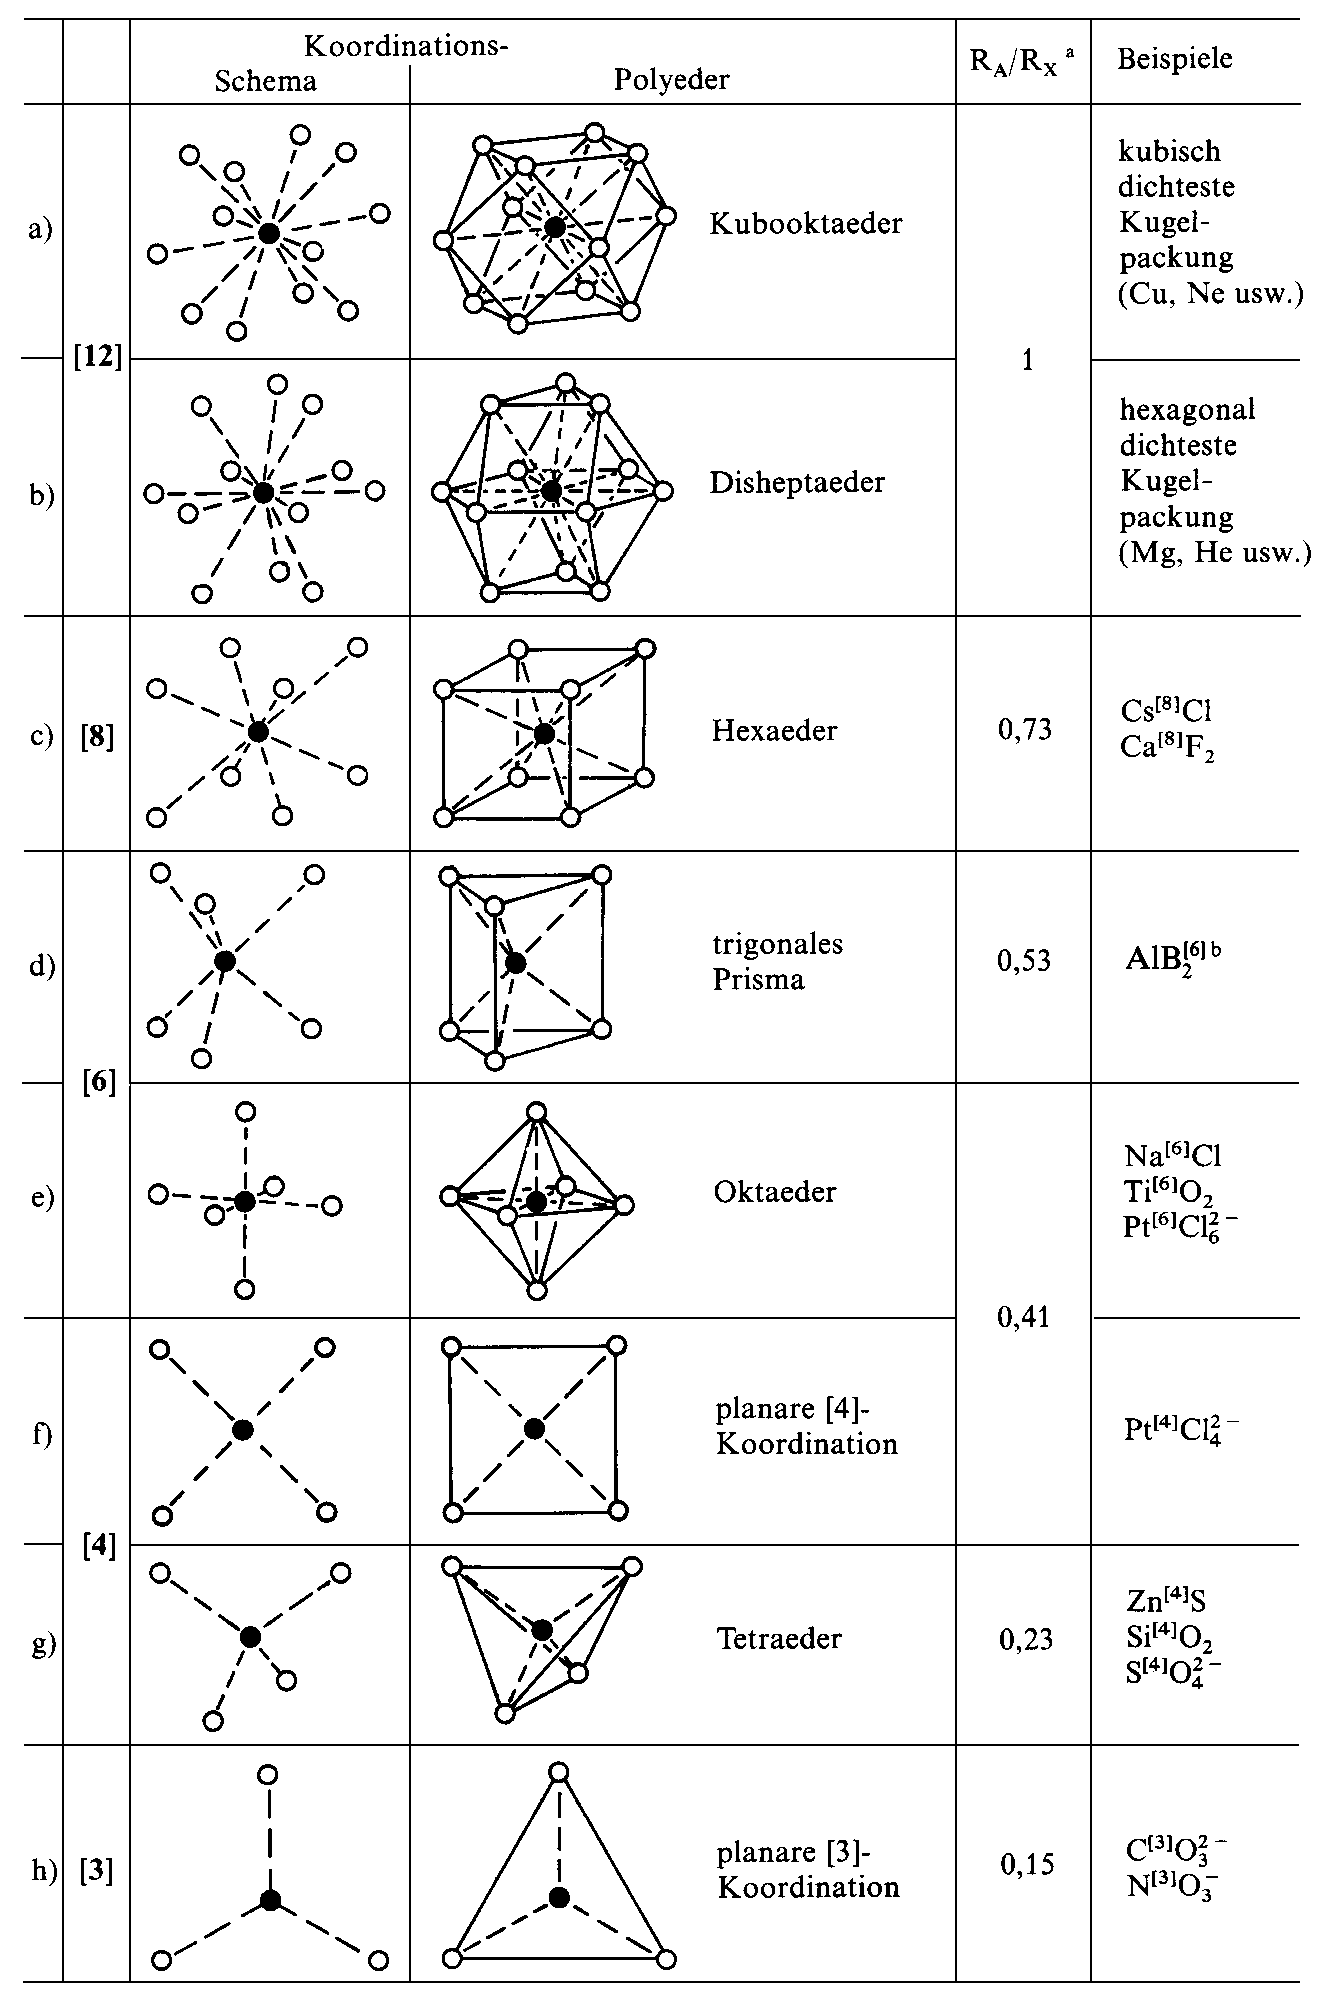 59 Abb. 3.2.3-1 Wichtige Koordinationspolyeder (Borchardt-Ott, 1993, Tab. 11-1)).